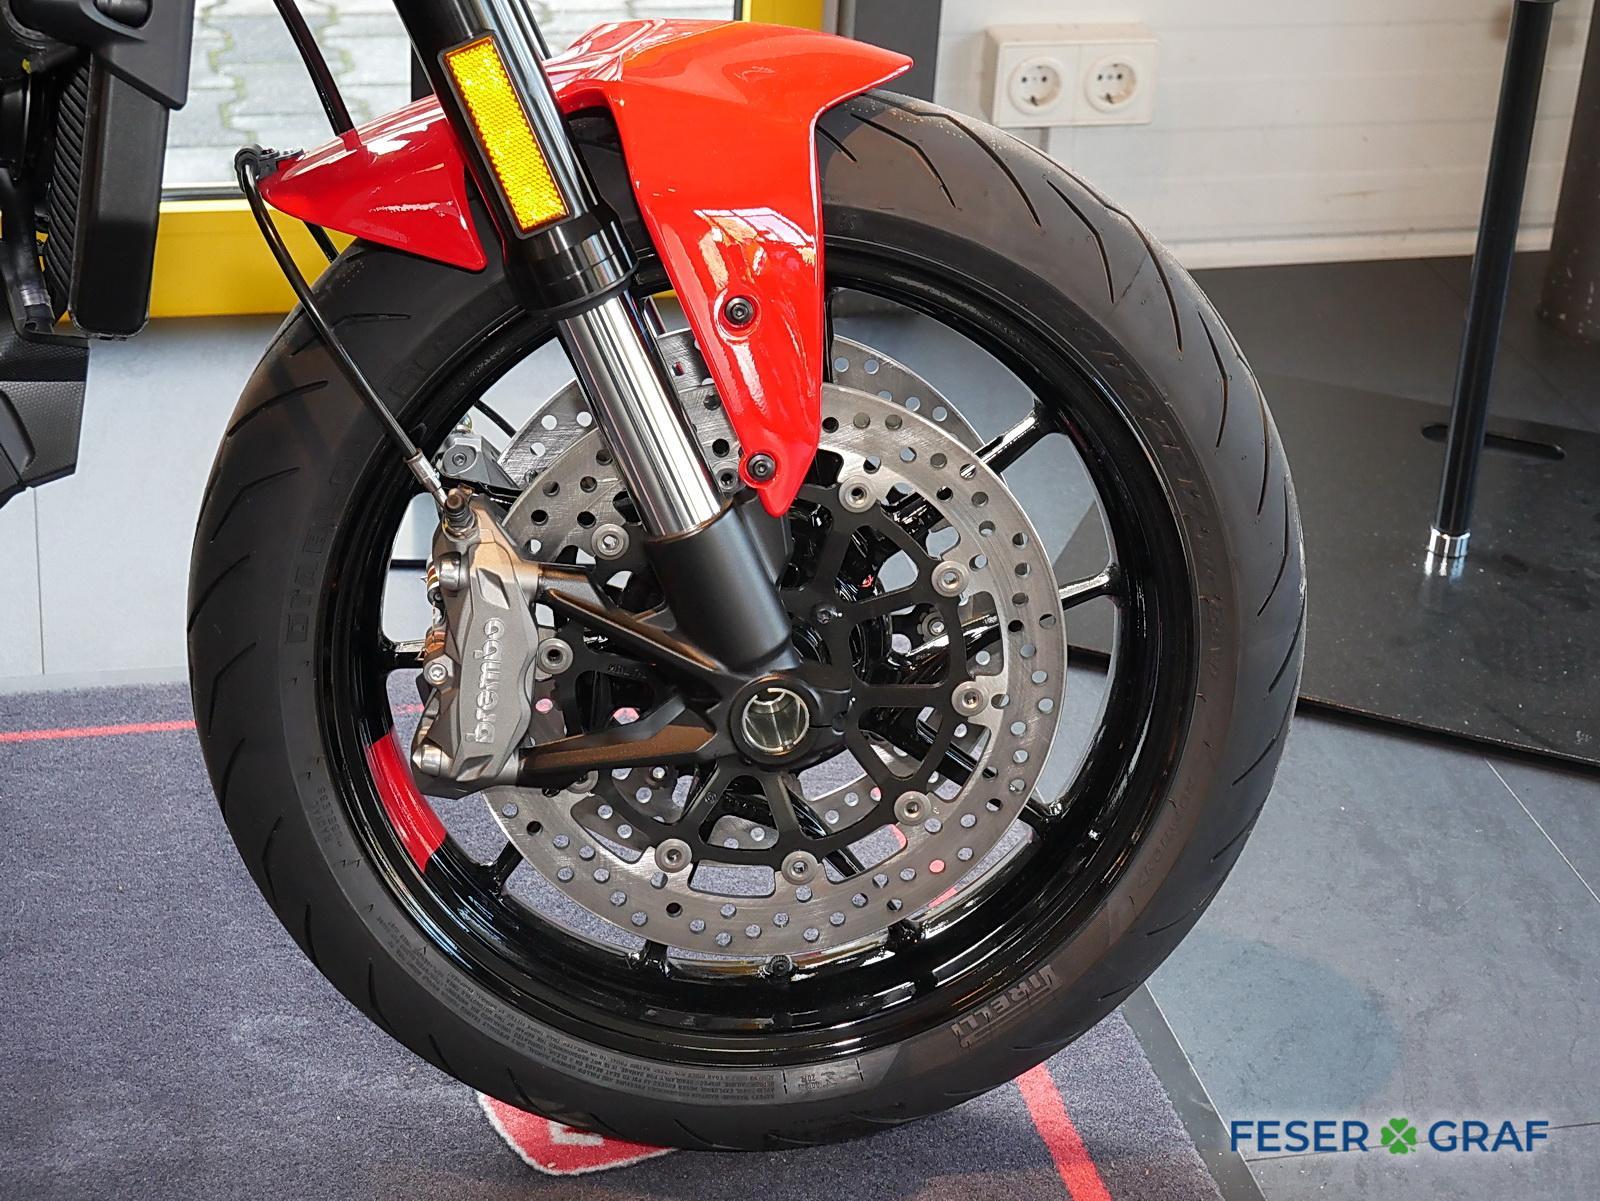 Ducati Monster Plus Aktionszins 2,99% - Zubehöraktion 